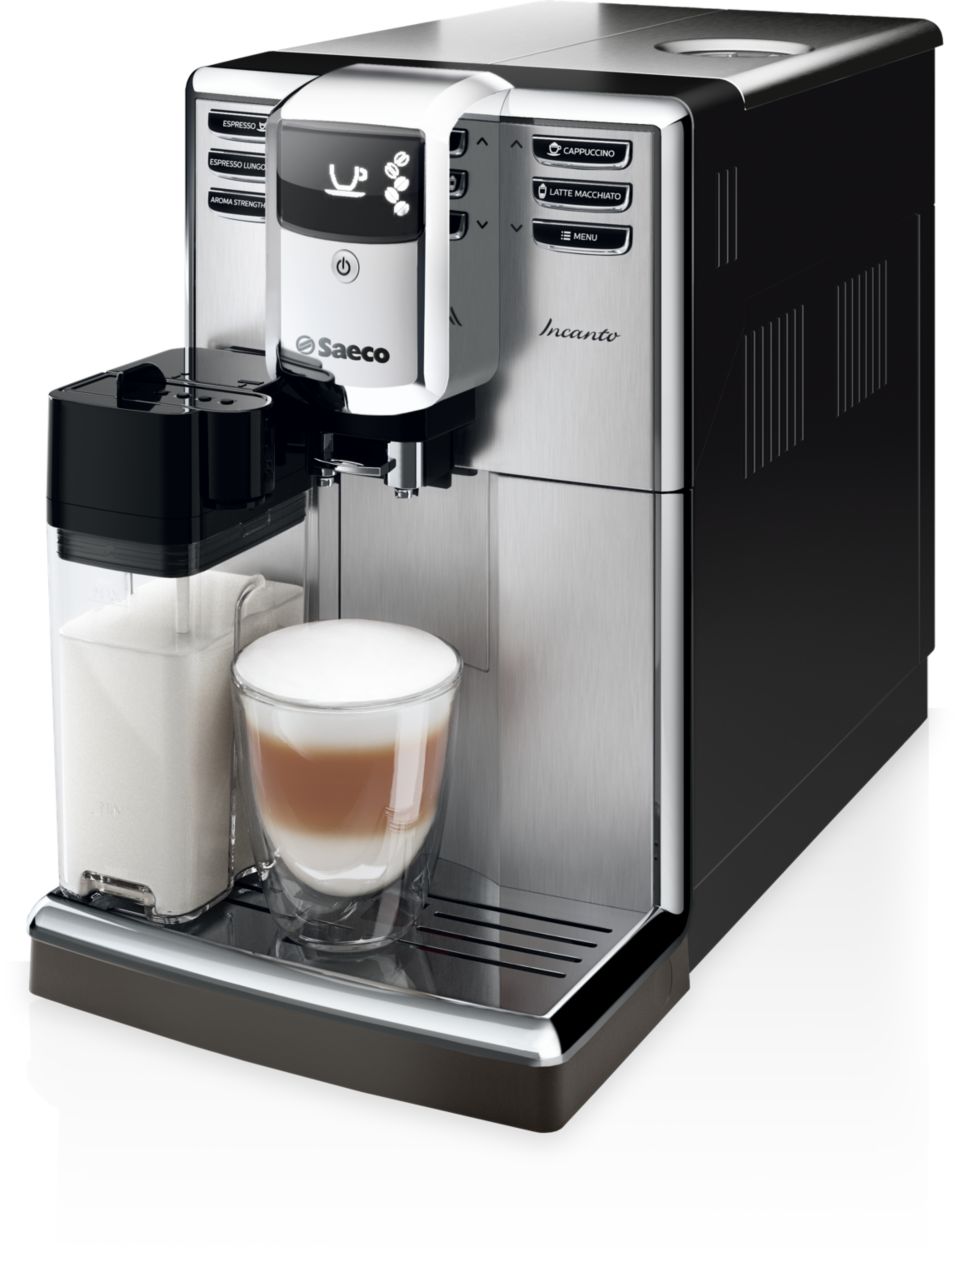 Philips Fully Automatic Espresso Machine